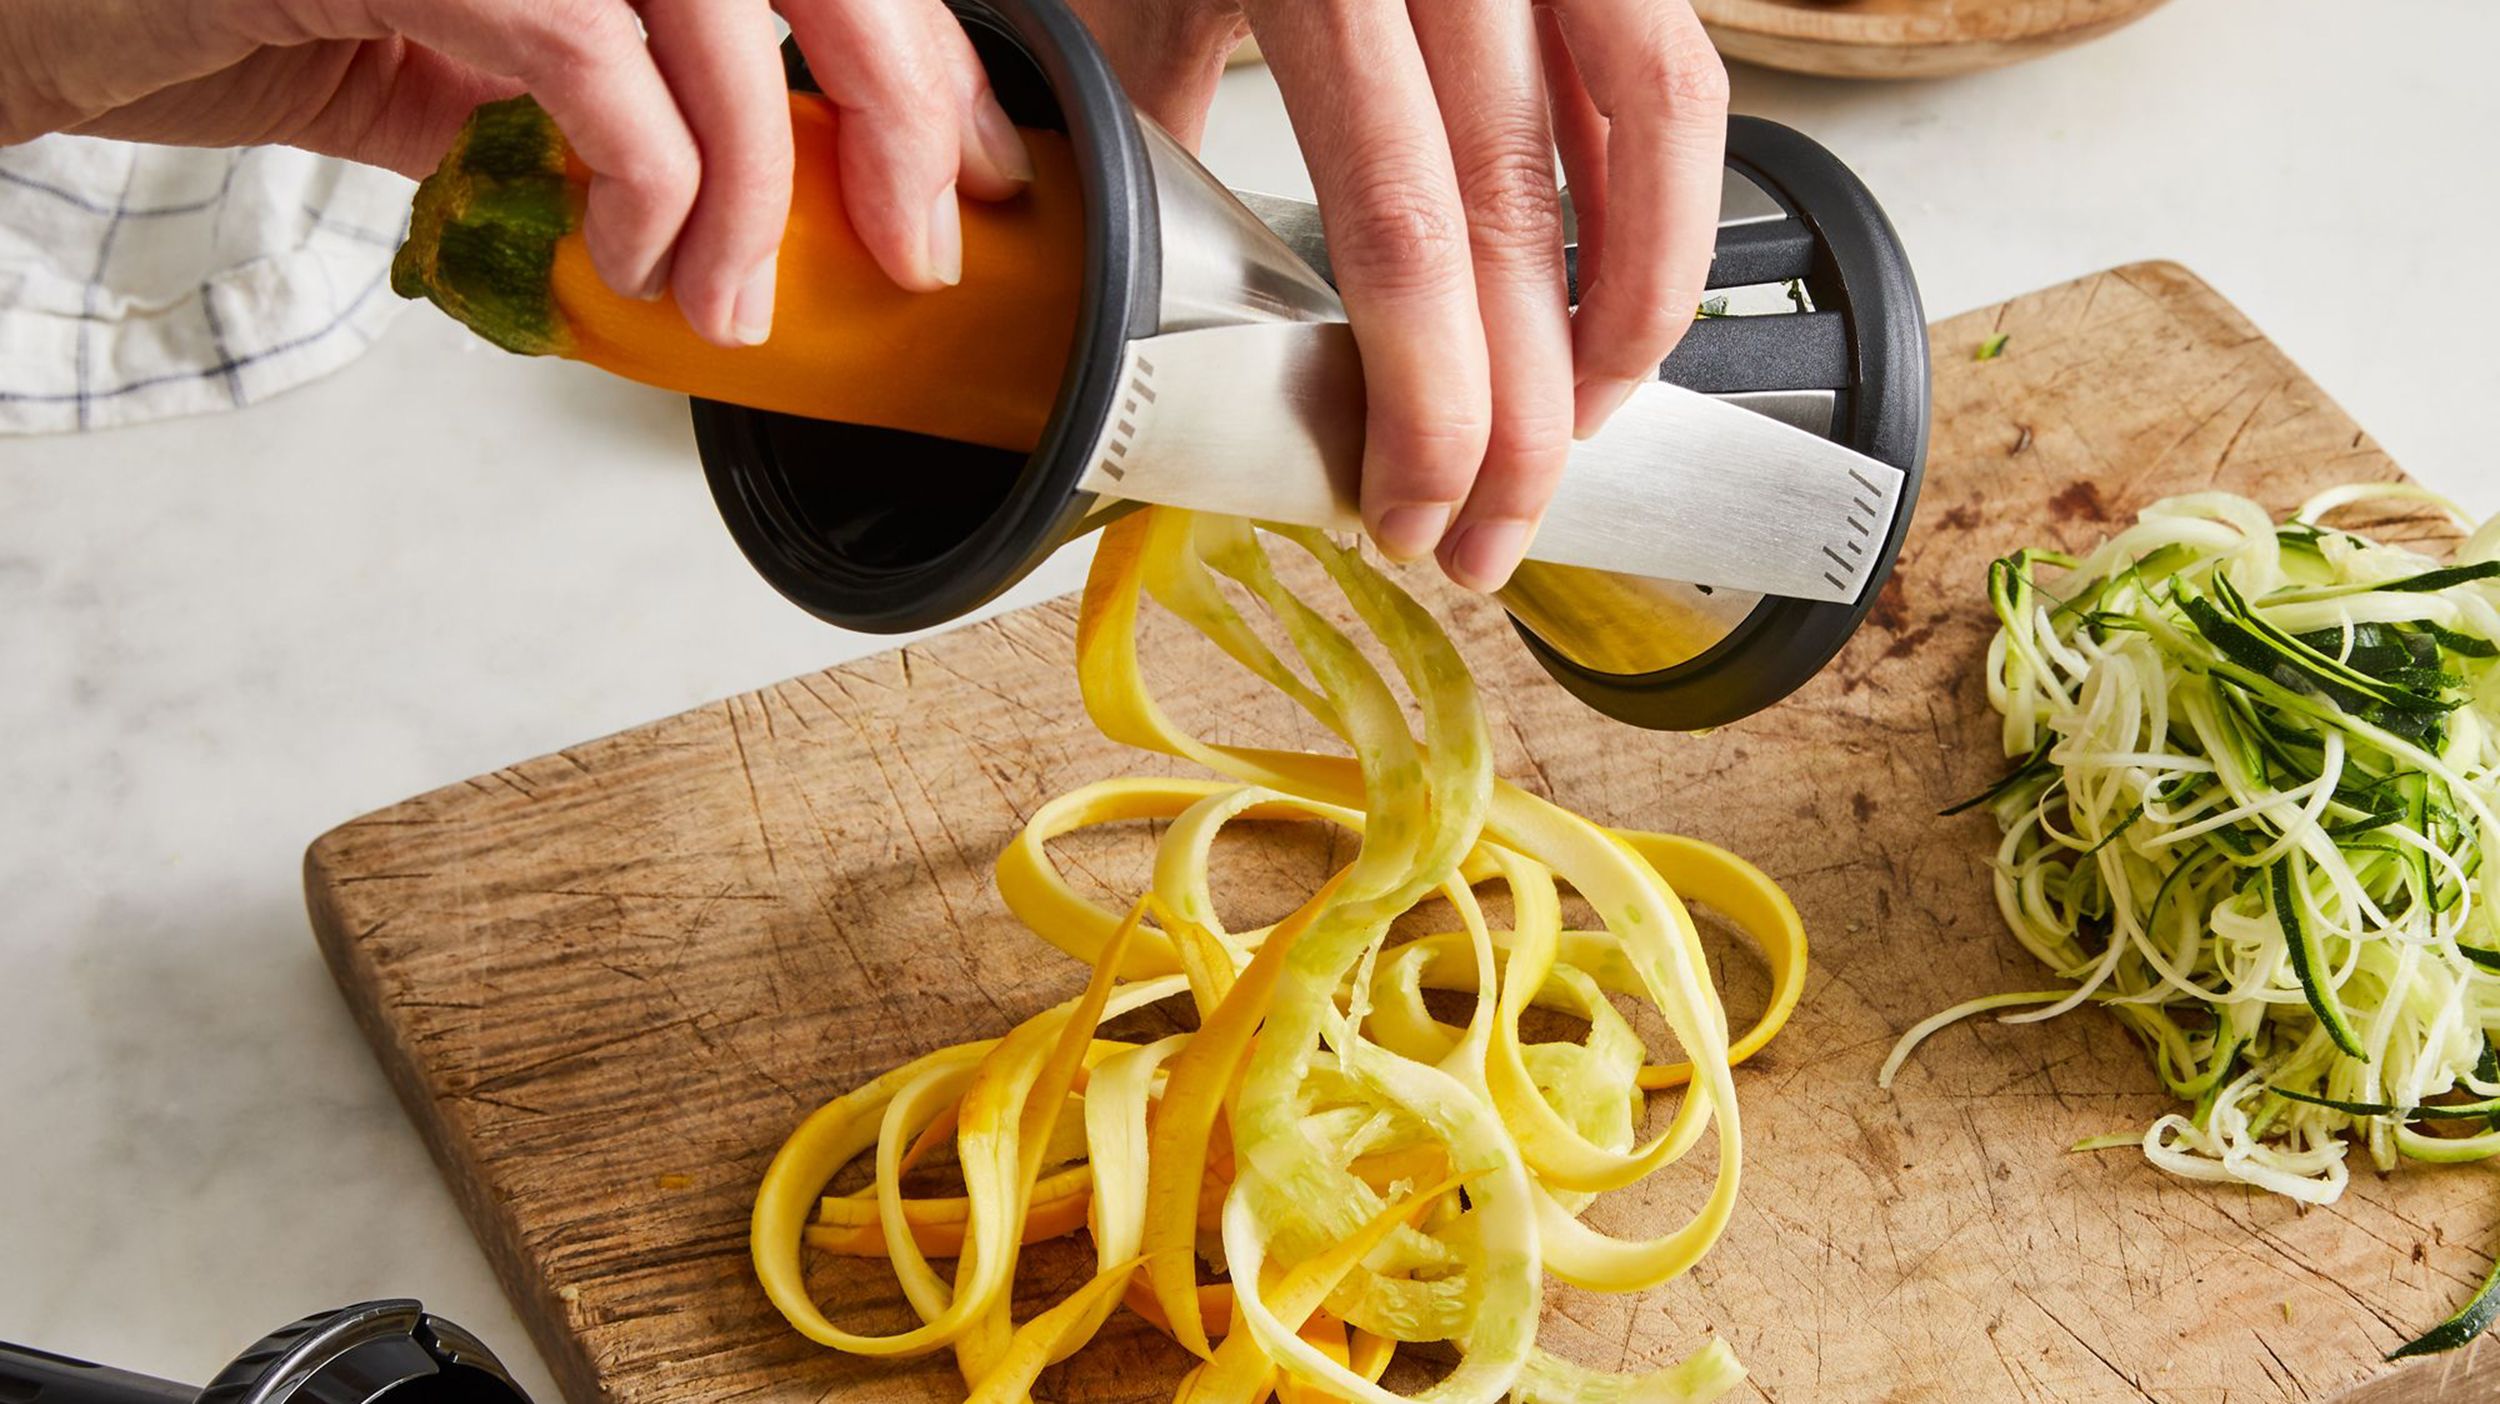 20 Genius Healthy Cooking Gadgets